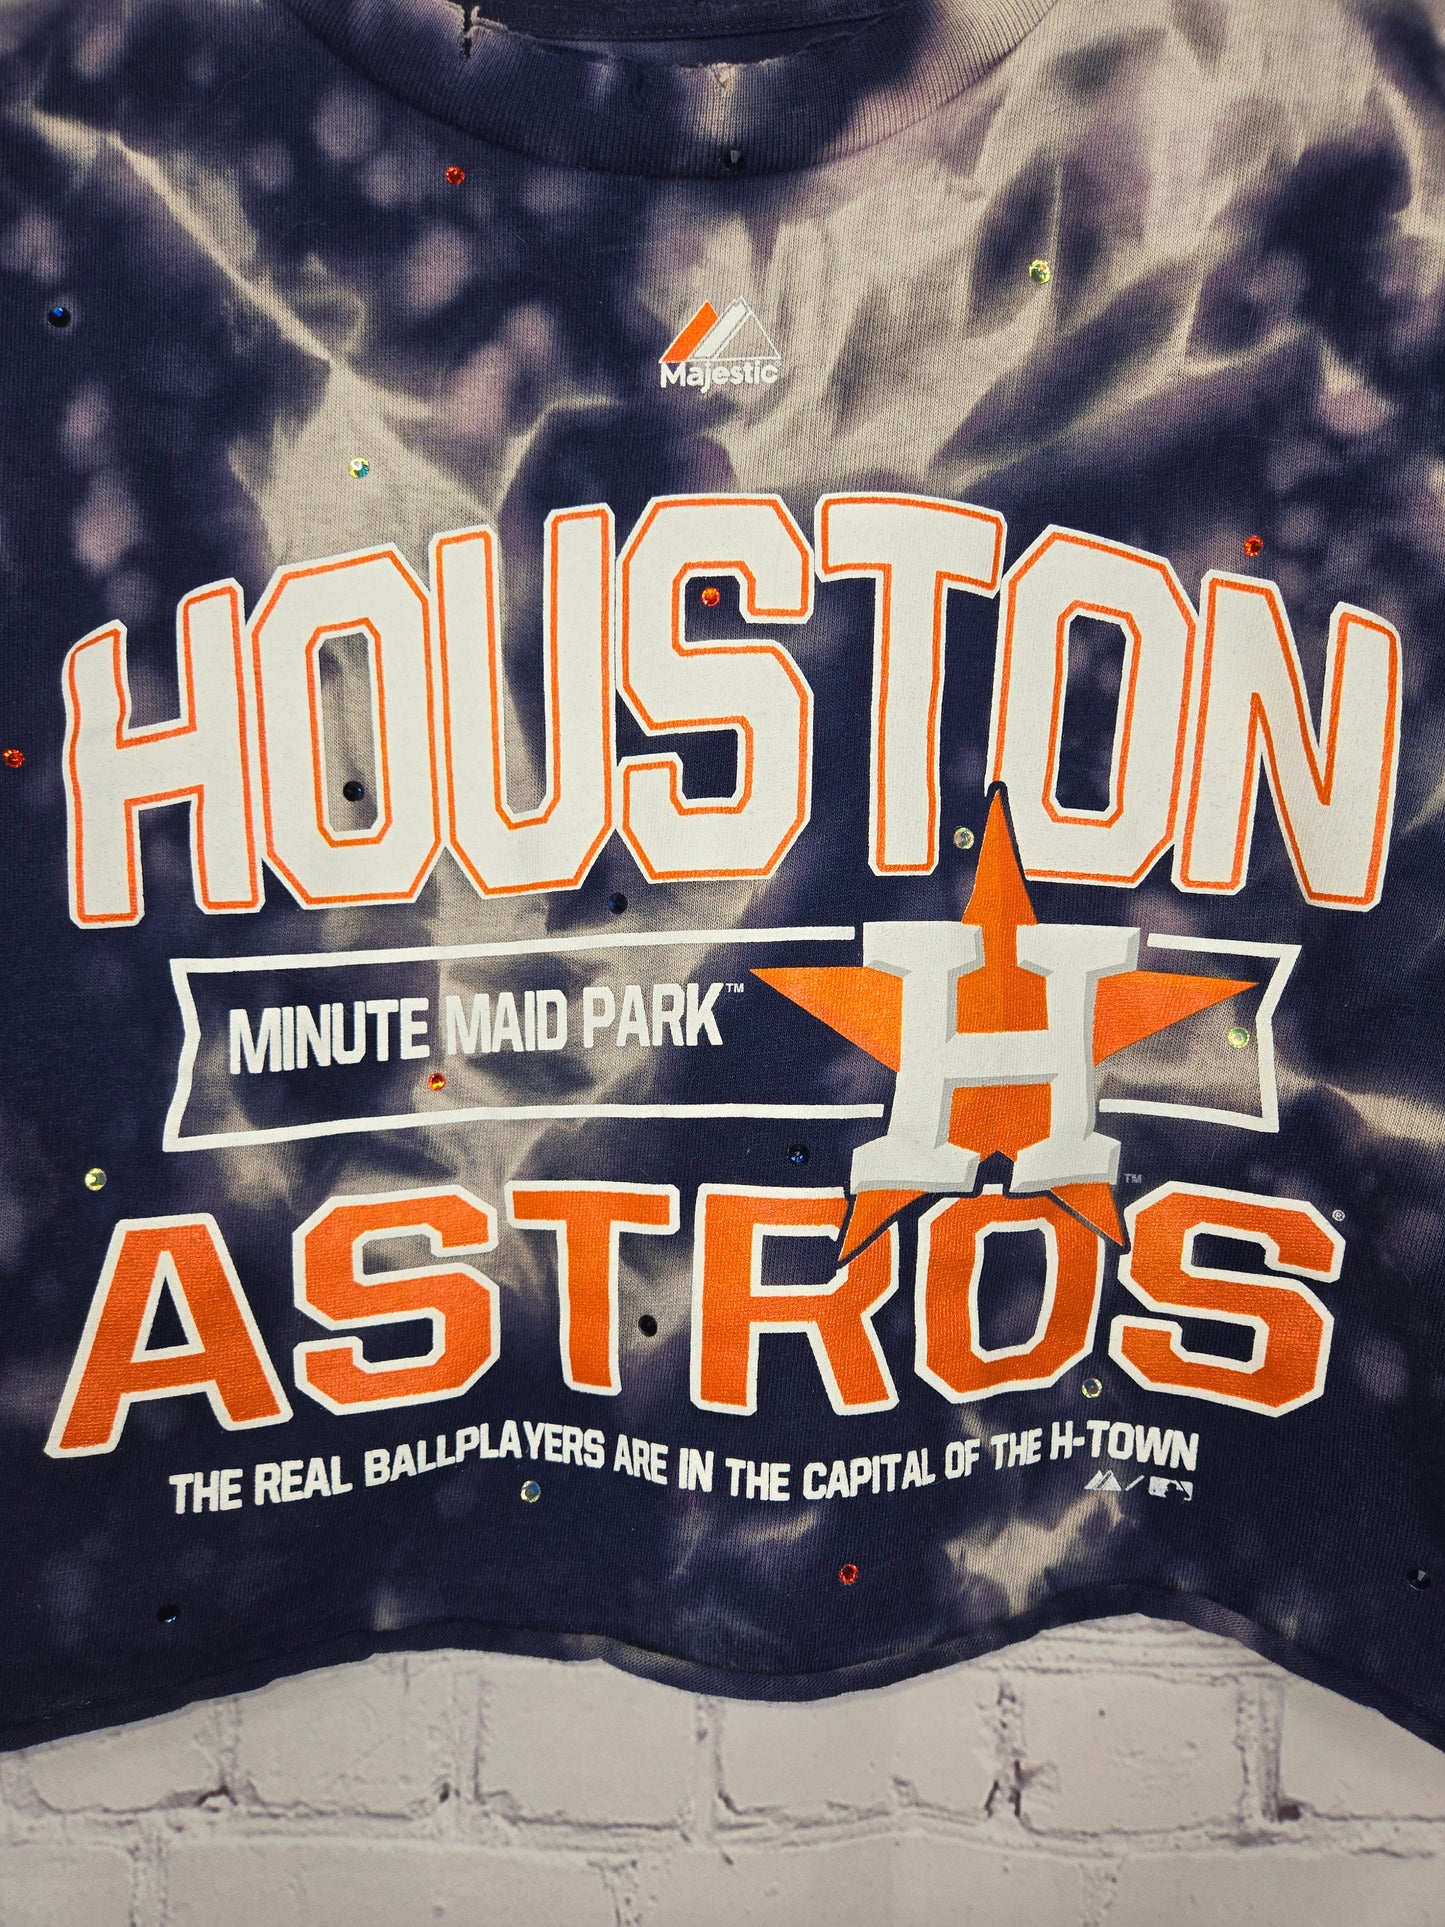 Houston Astros Crop Tee